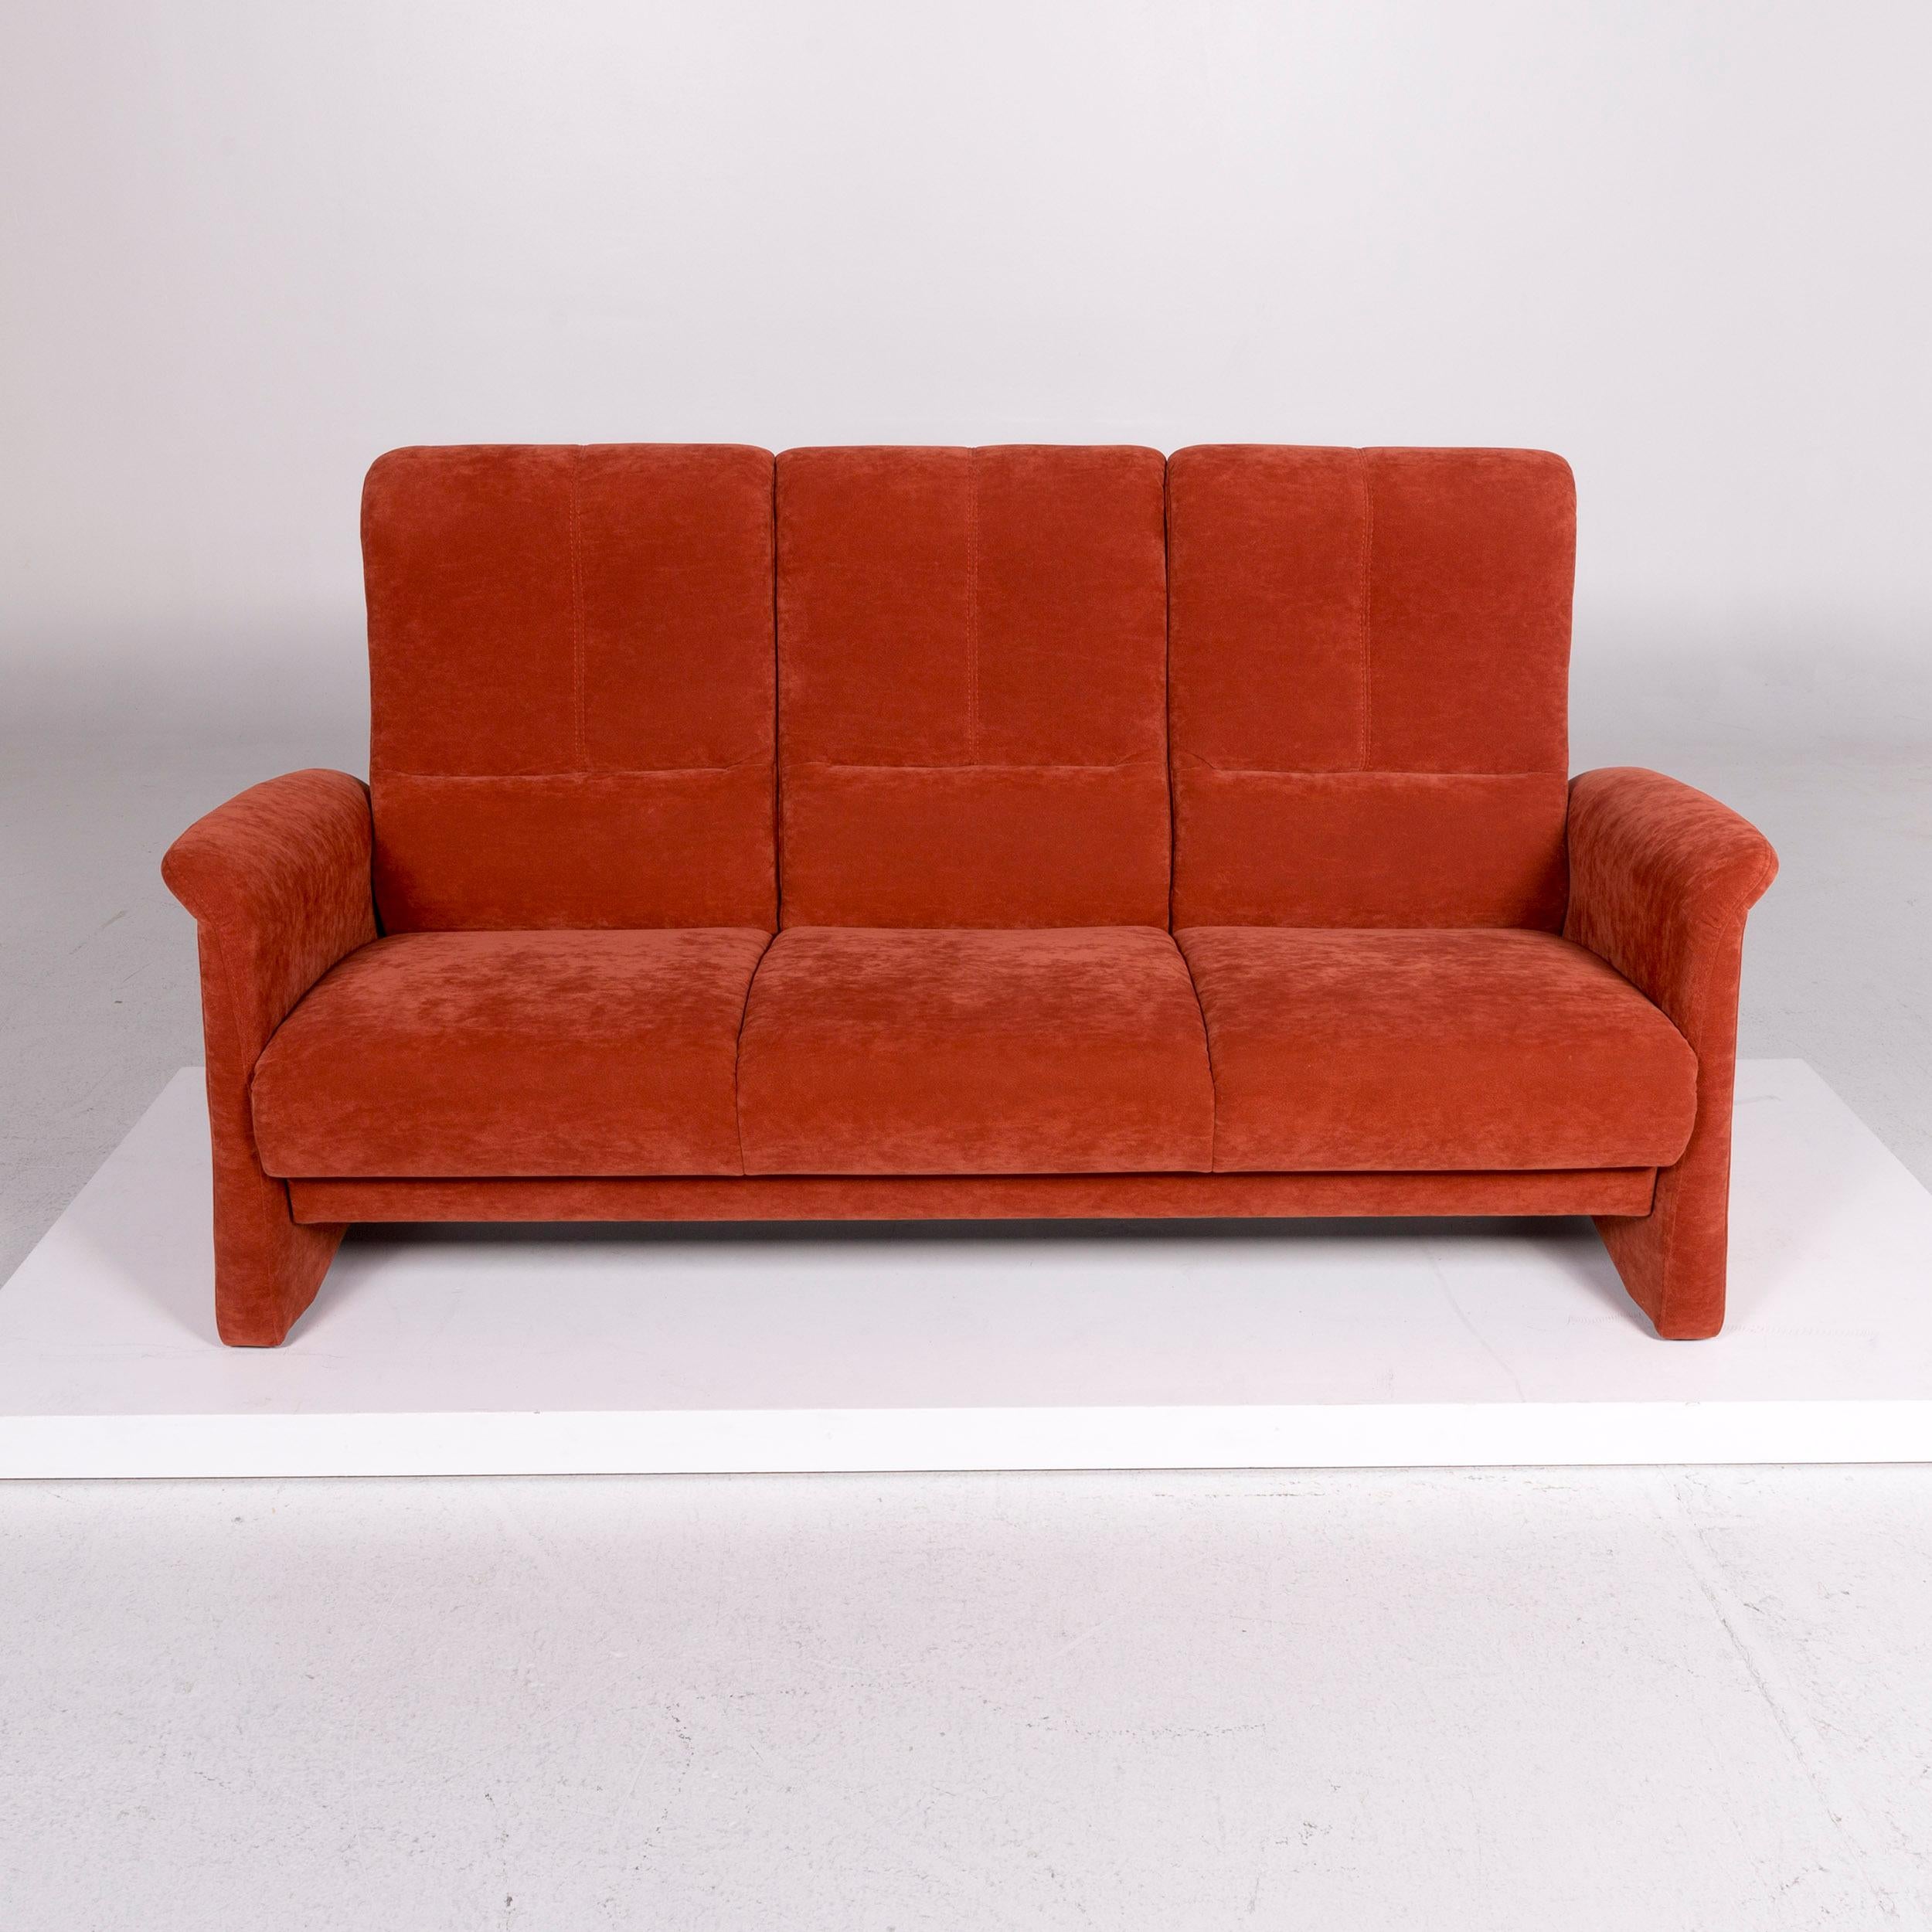 Polish Himolla Fabric Sofa Orange Rust Red Three-Seat Couch